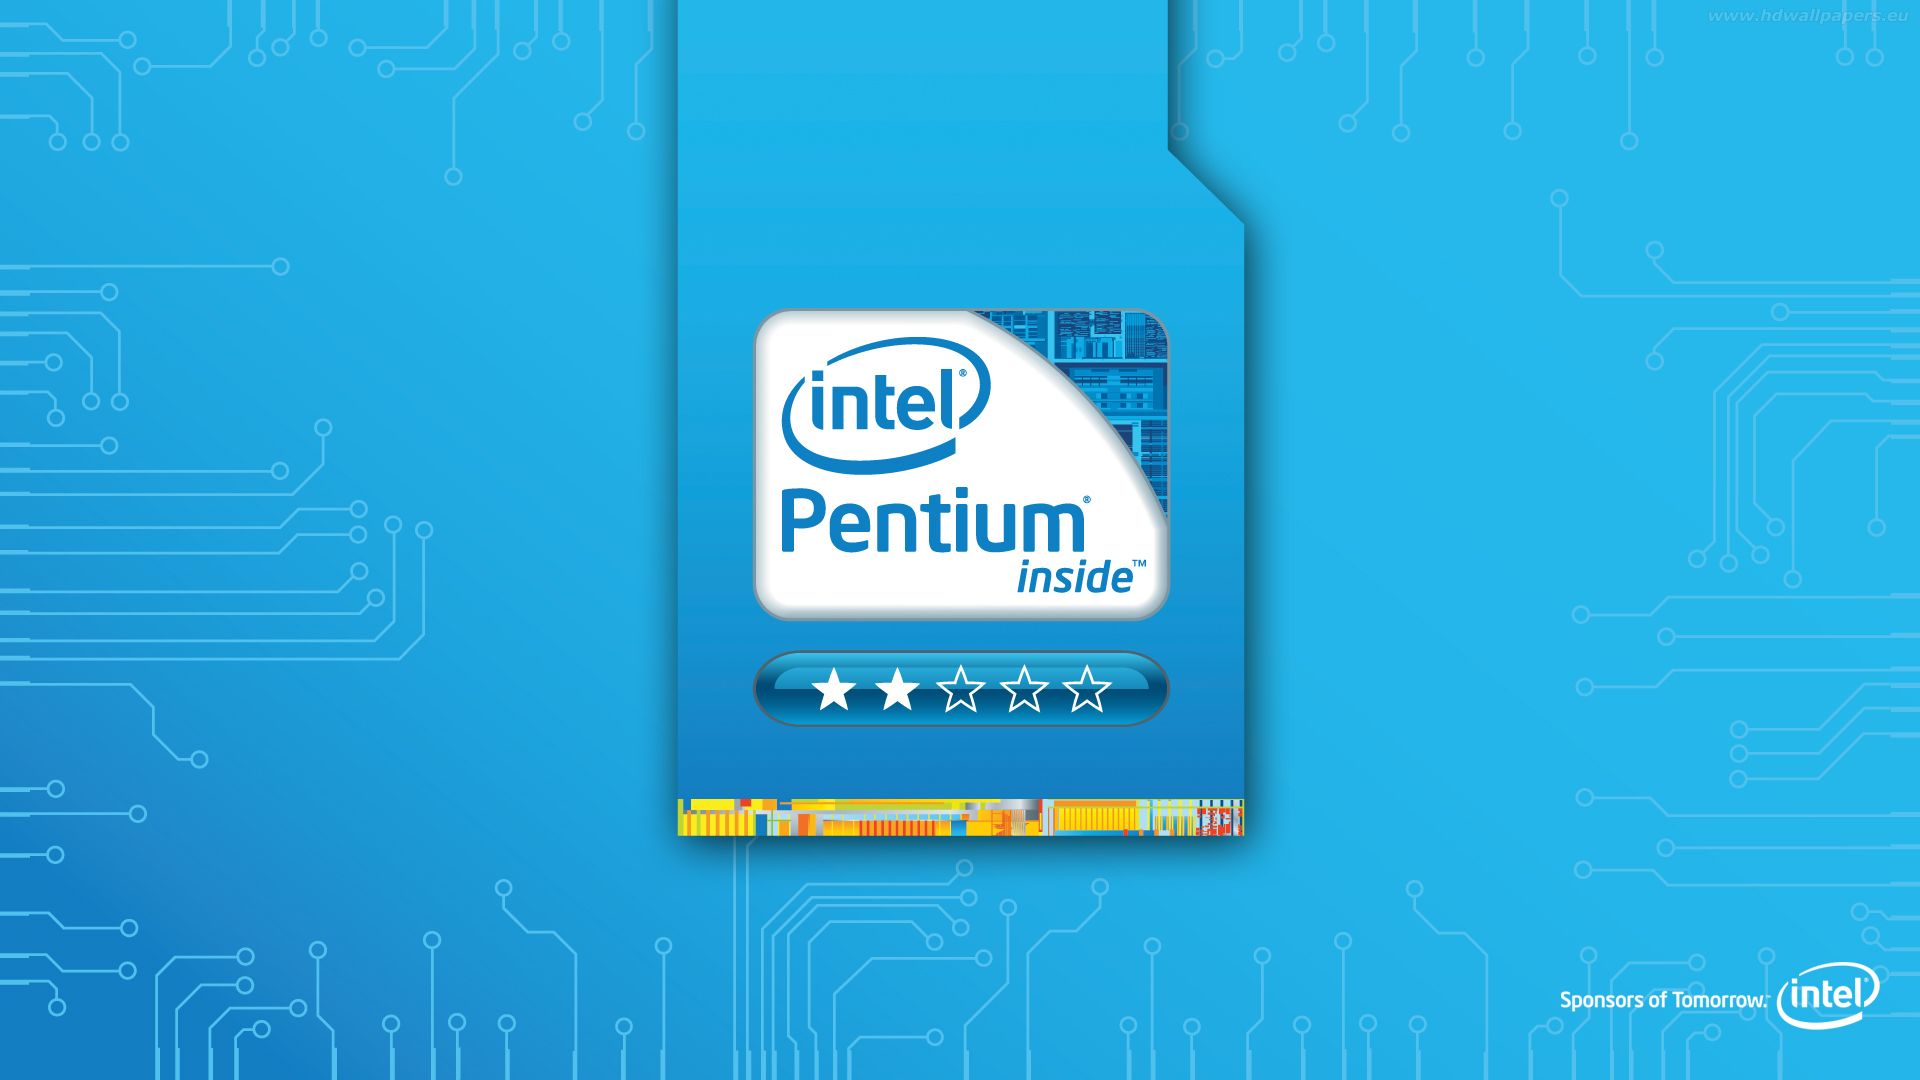 Intel Pentium Wallpaper. Business Intel Wallpaper, Intel I5 Wallpaper and Intel Extreme Wallpaper